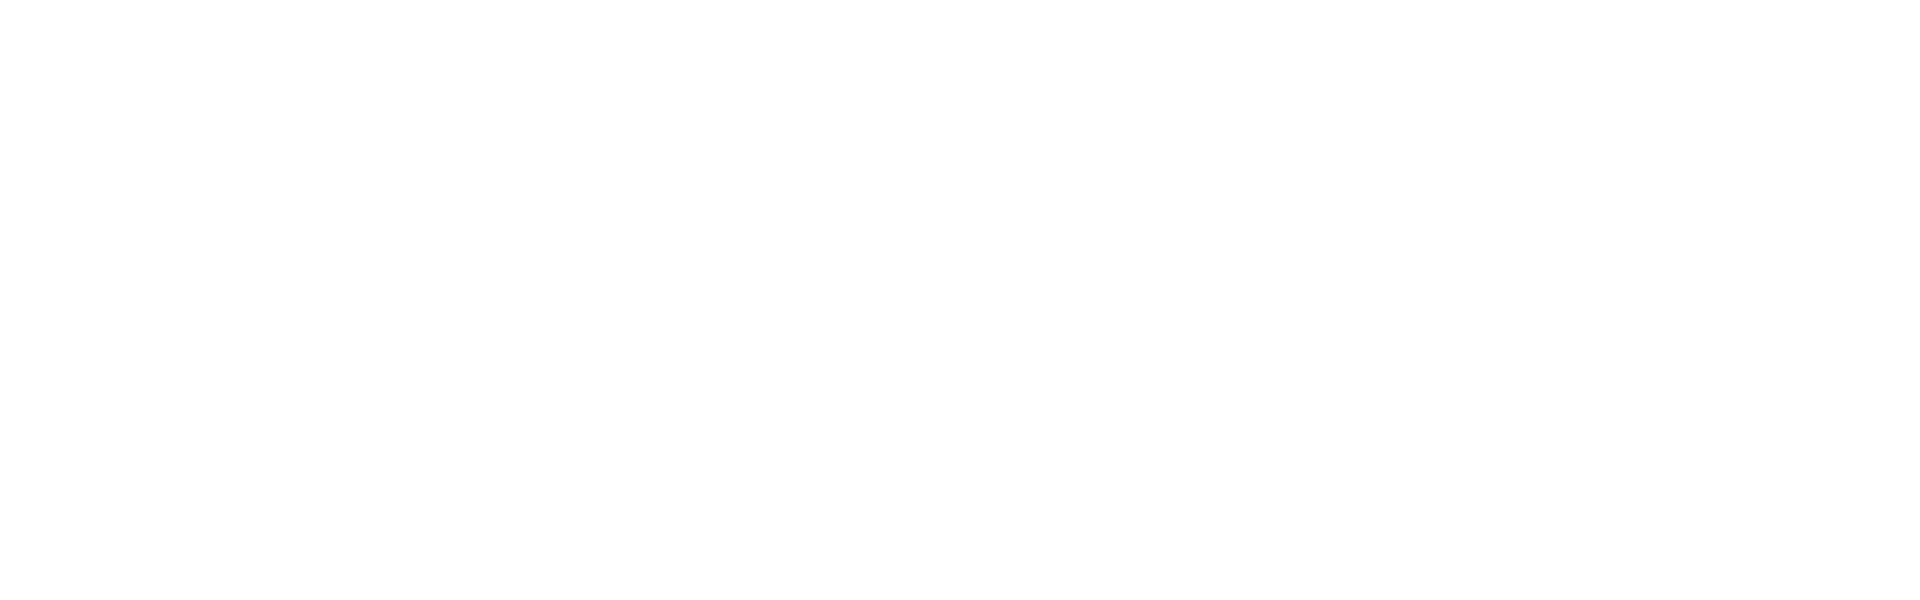 cron creative studio